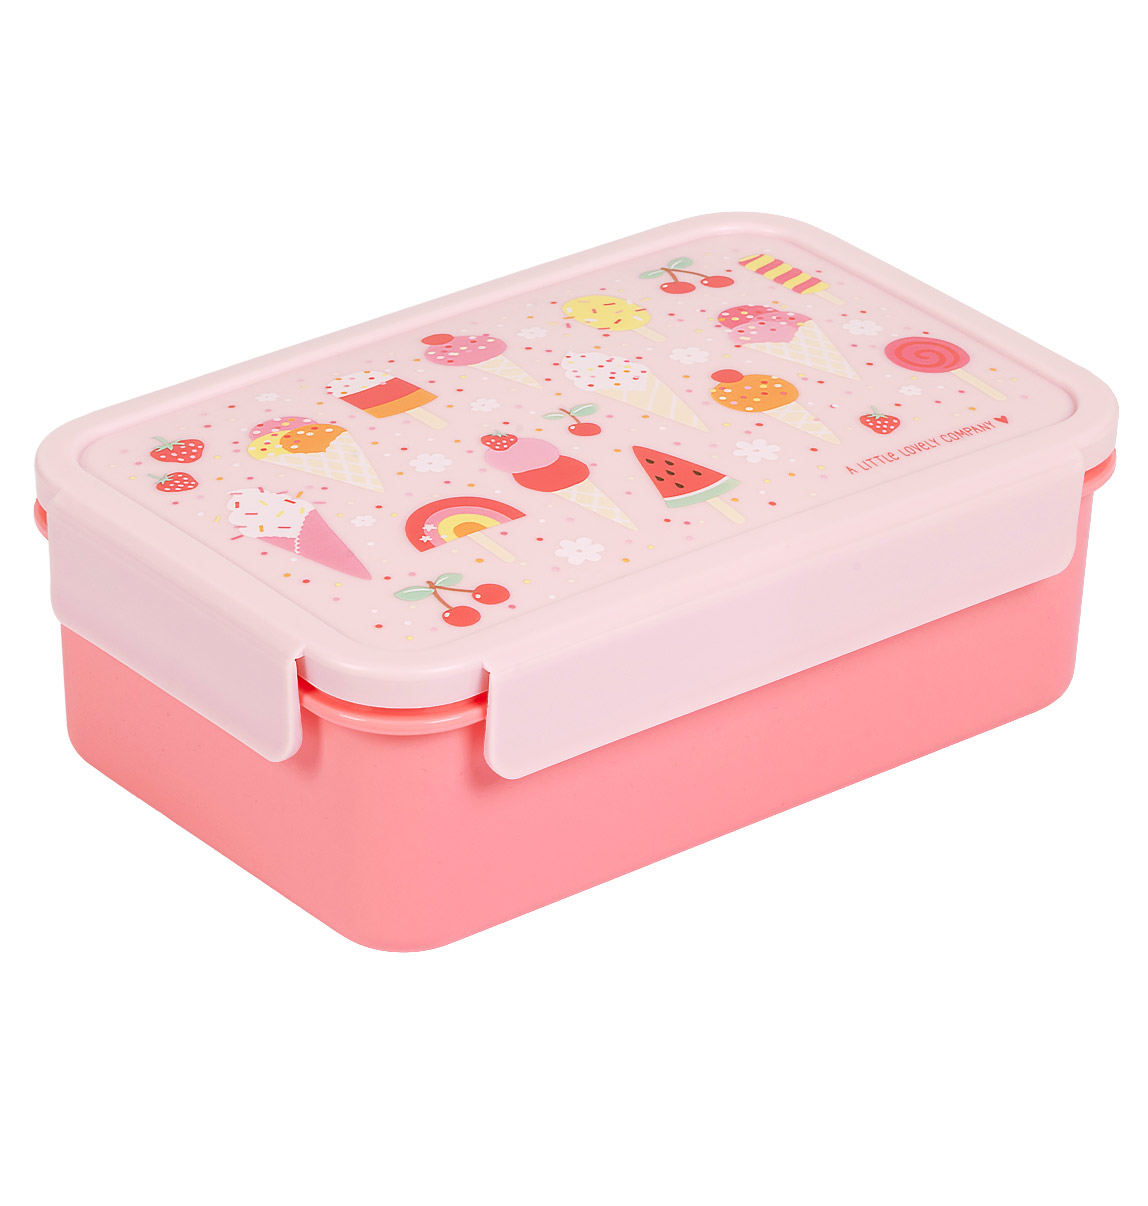 Afbeelding A Little Lovely Company Lunchbox Bento I Ijsjes